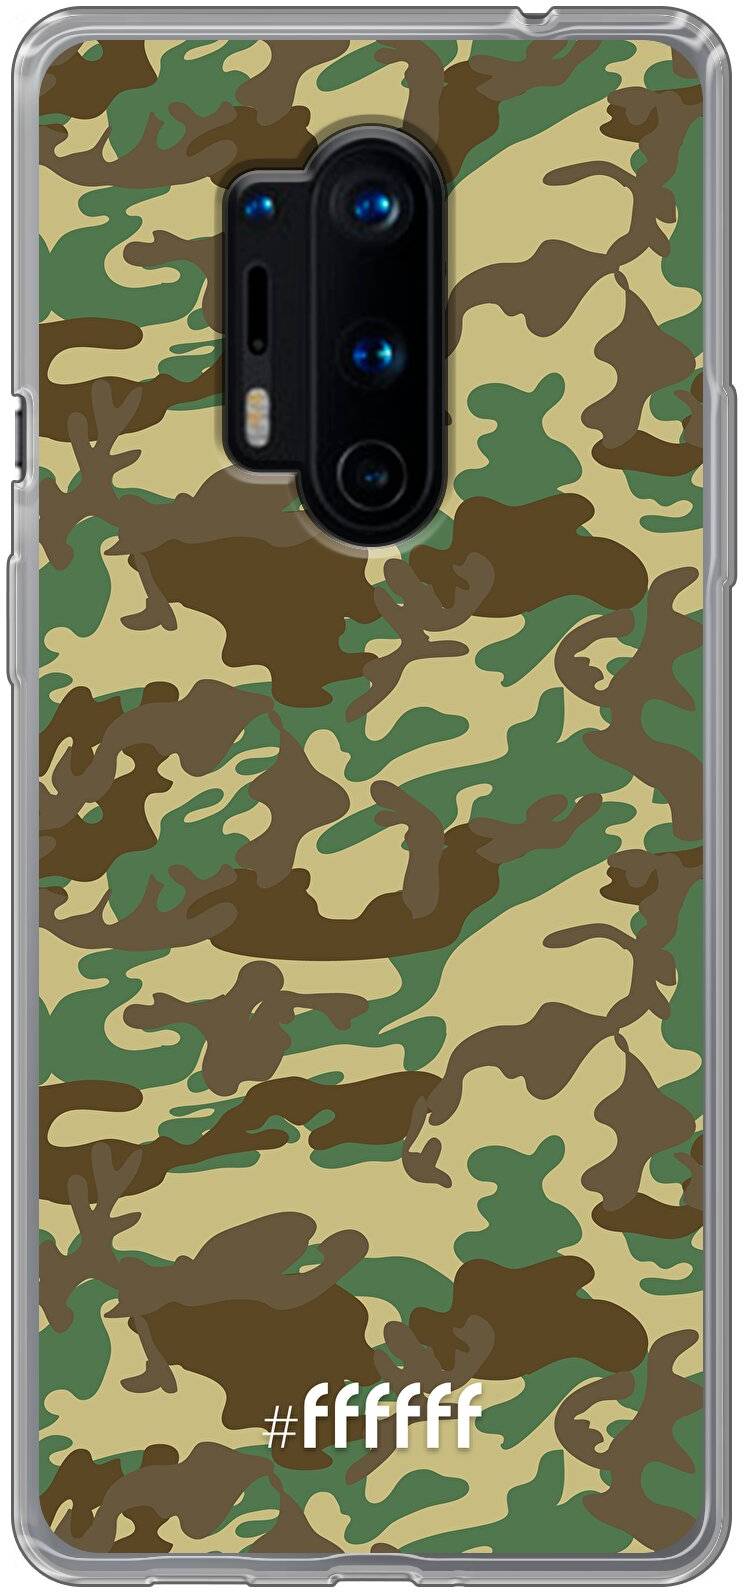 Jungle Camouflage 8 Pro